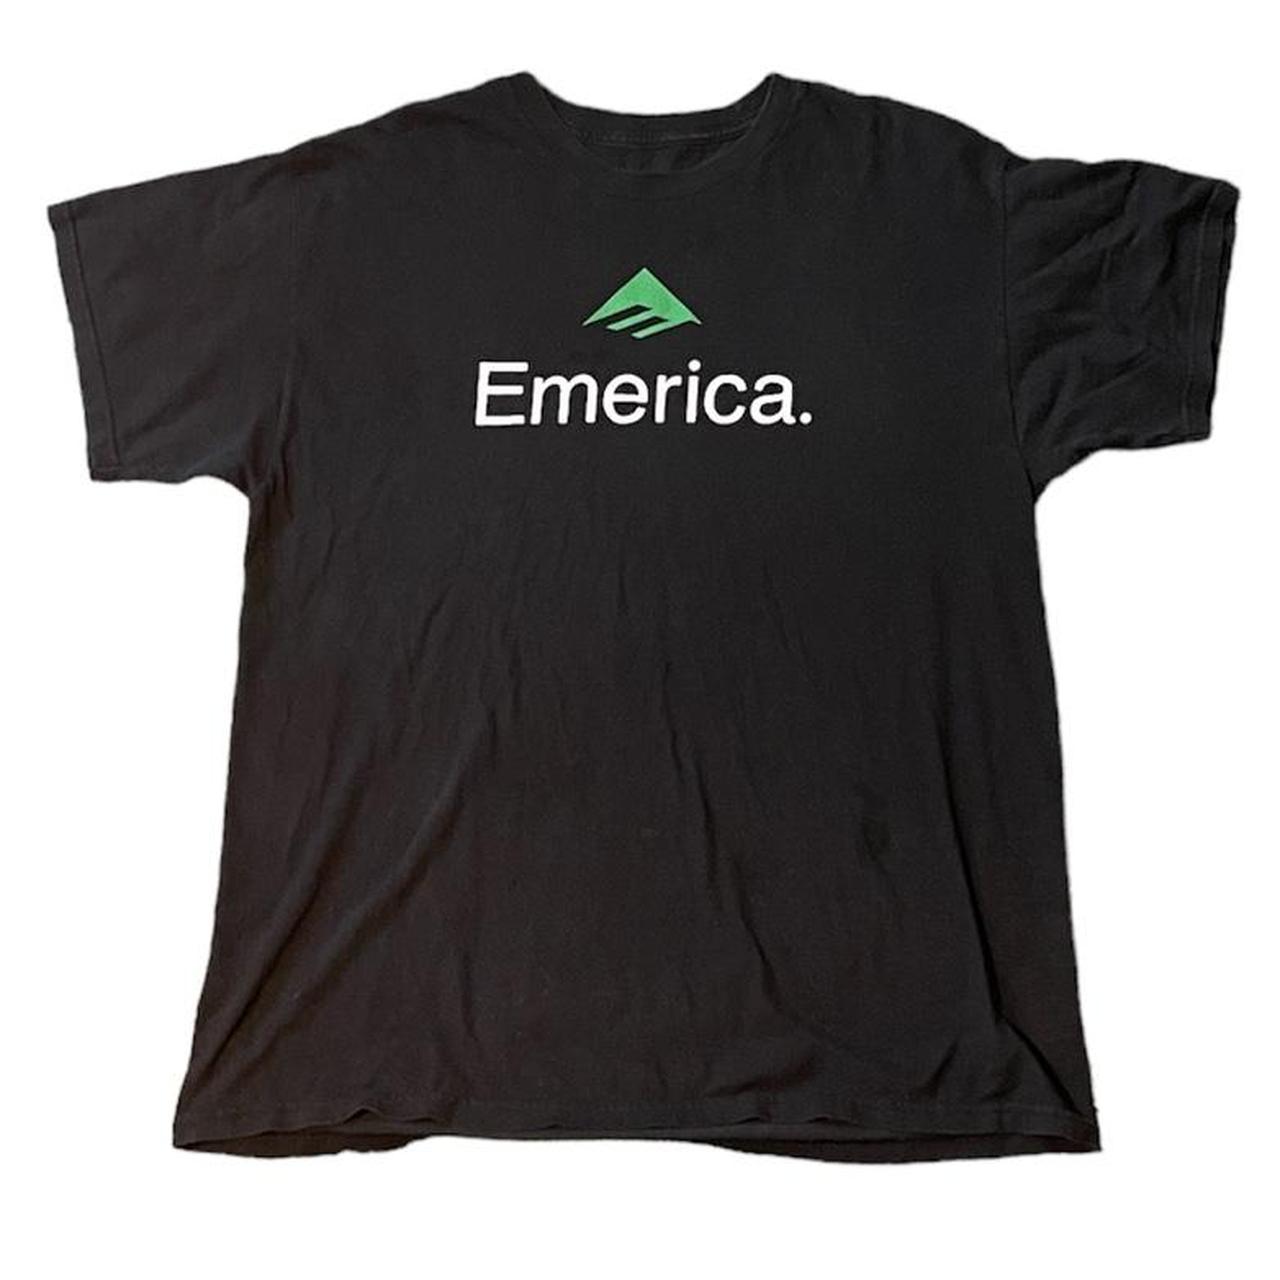 Emerica Men's T-shirt